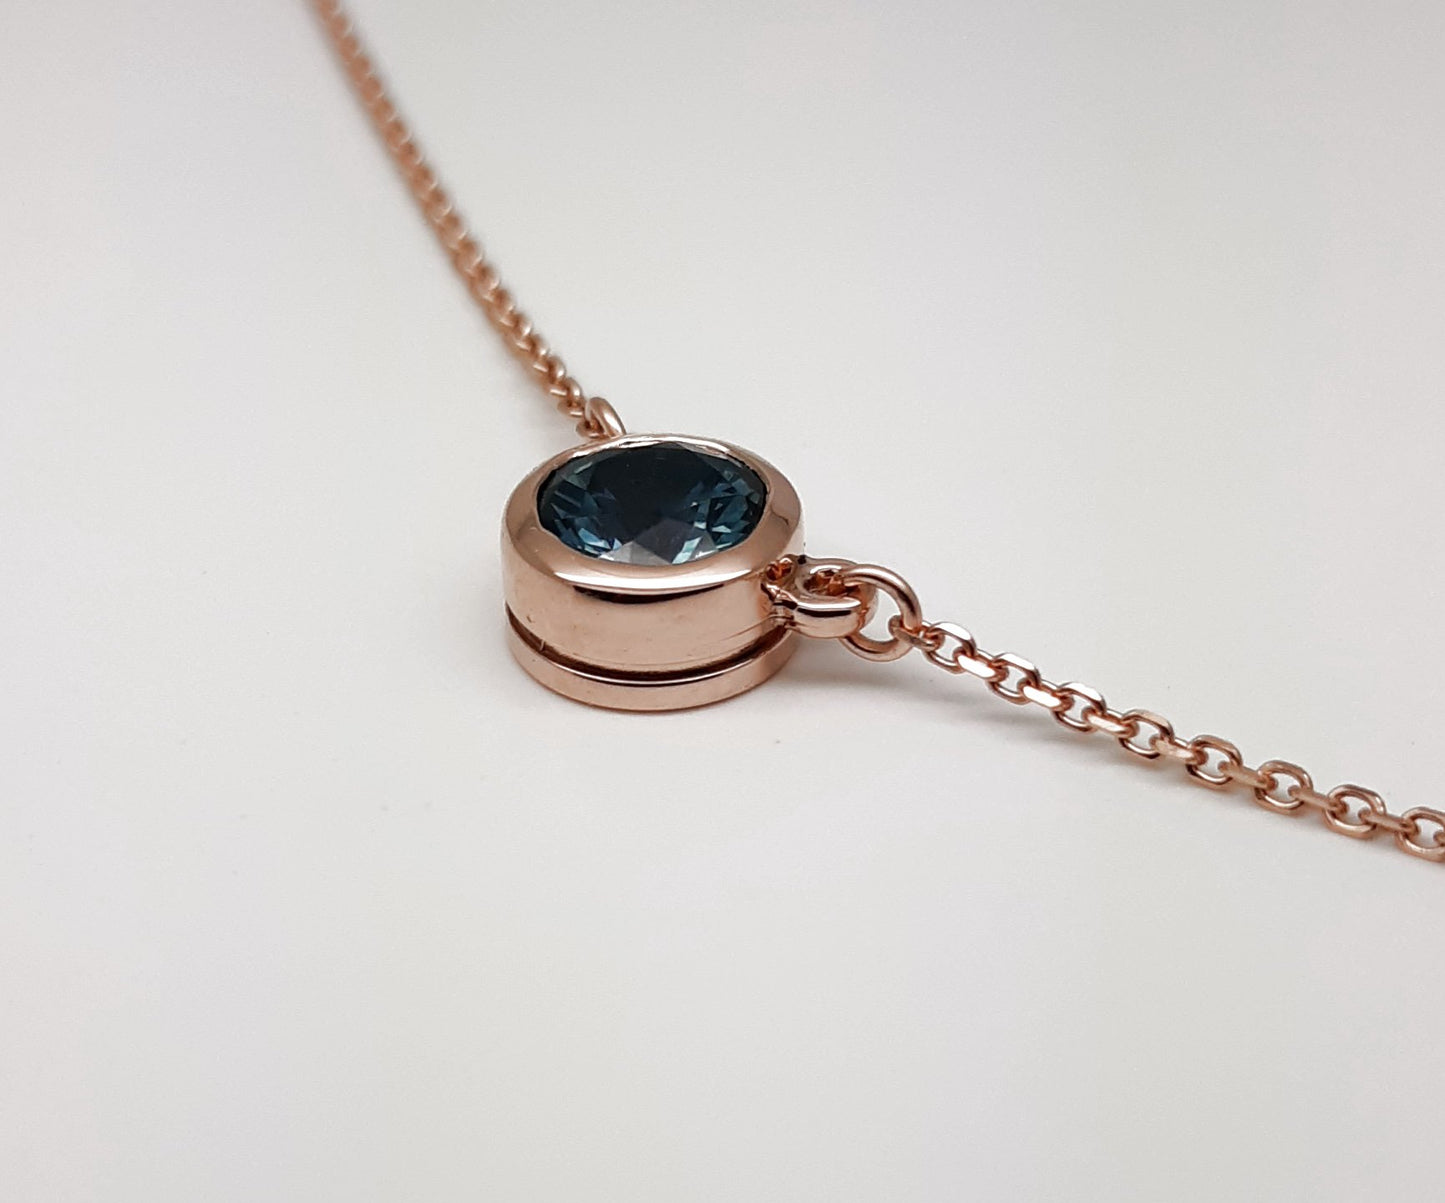 A lady's Minimalist 14k rose gold natural 0.95 carat Montana blue sapphire bezel pendant on chain.